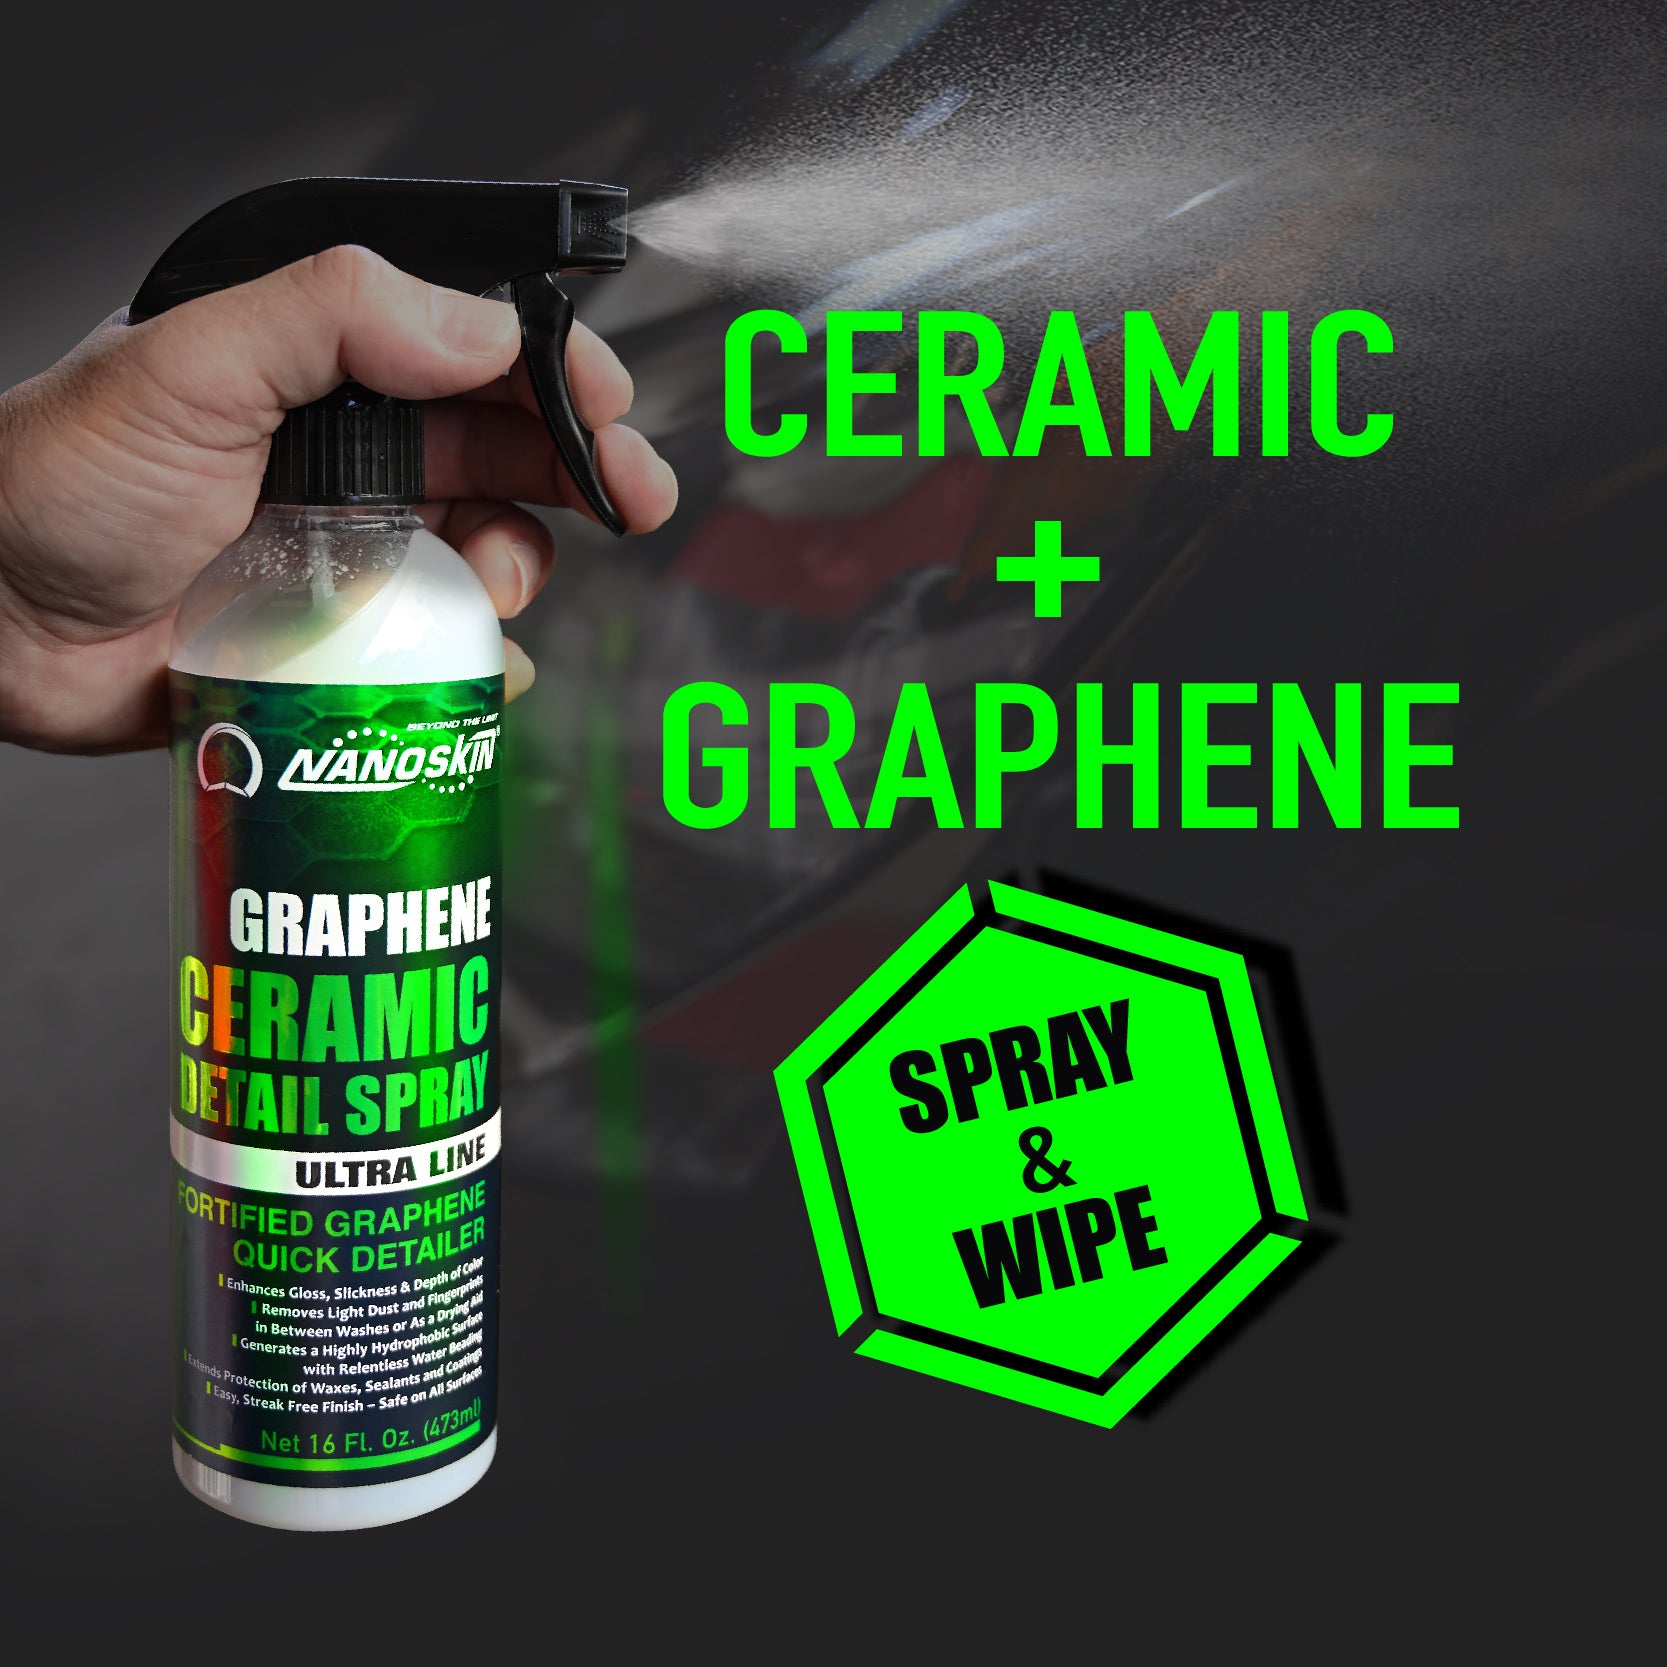 Ceramic Detail Spray - Waterless Wash and Spray